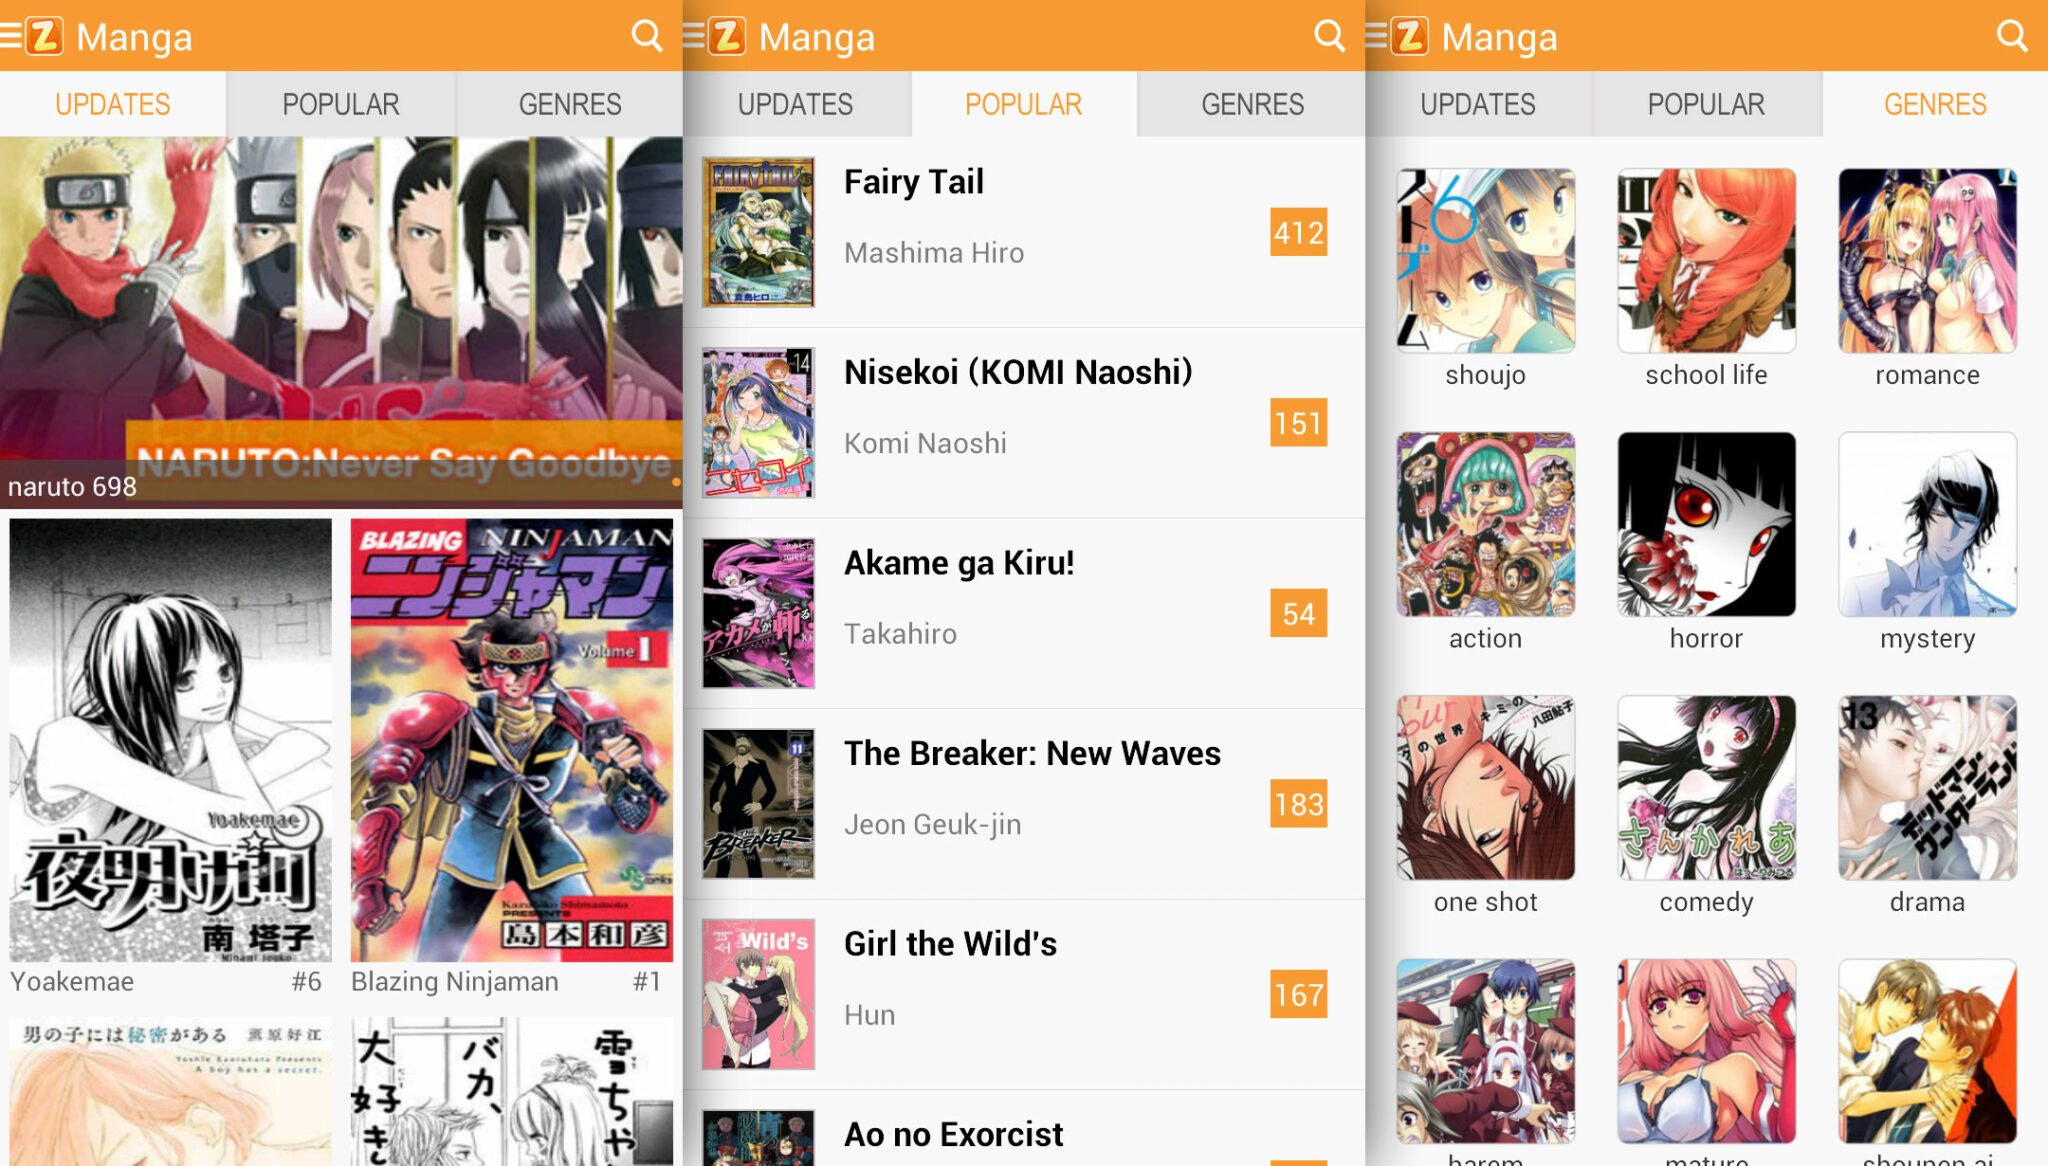 Mangaupdates. Music East Genre манги. ZINGBOX Manga описание. Манга как Жанр японской литературы итоги.